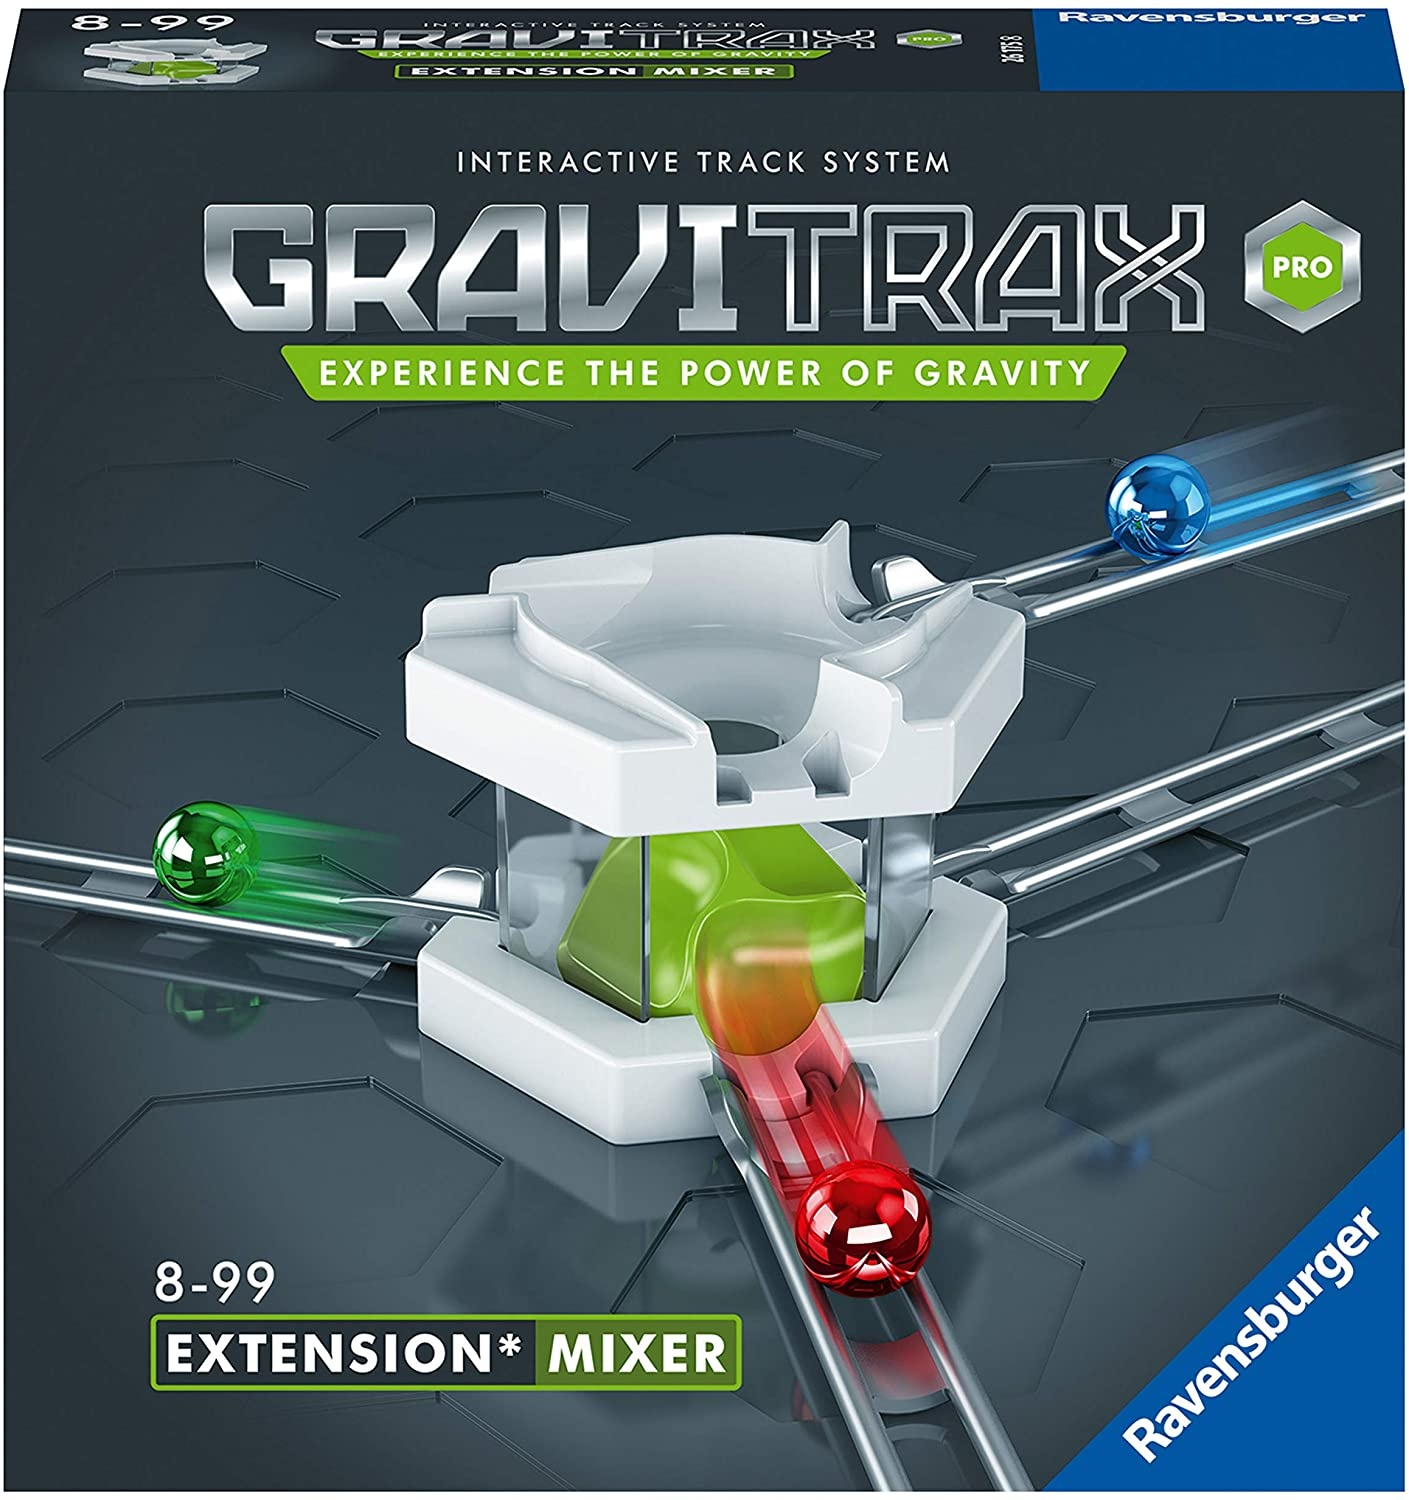 Ravensburger GraviTrax Pro - Splitter Expansion Set